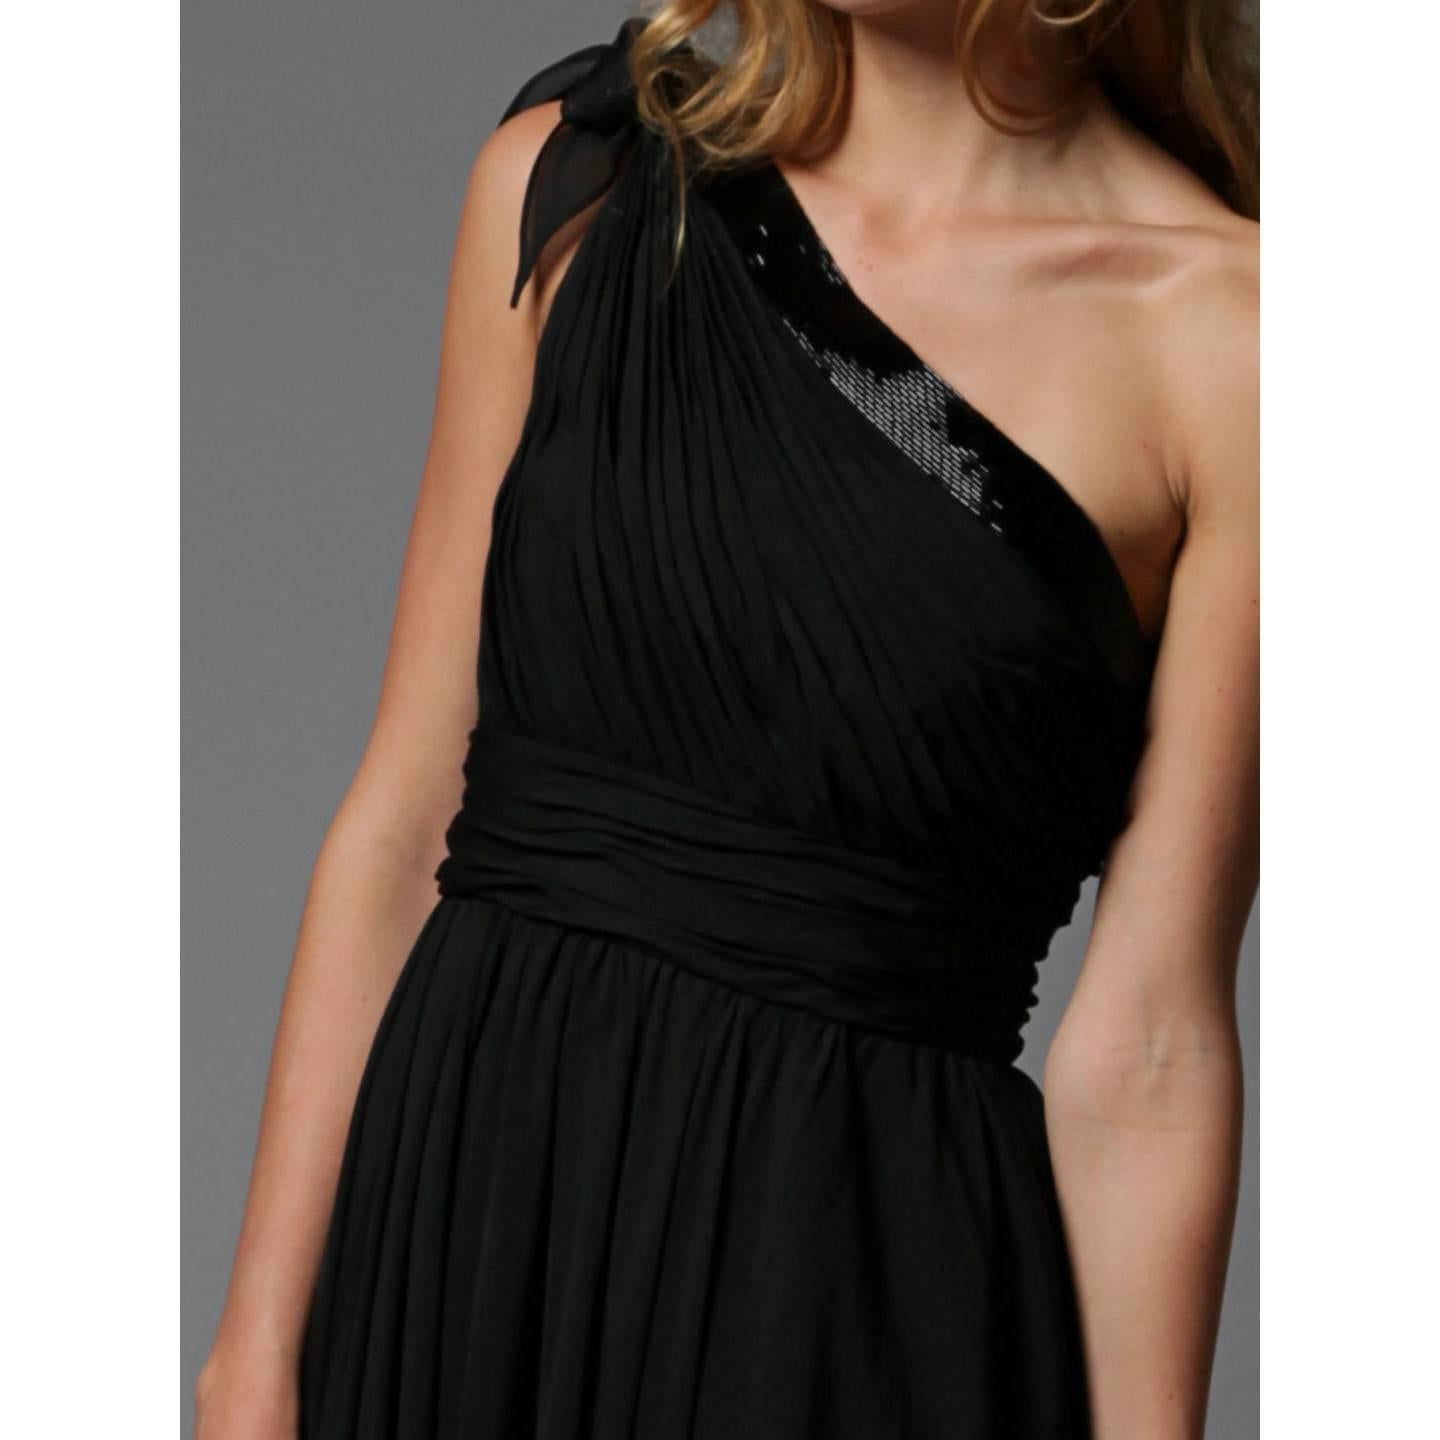 New Badgley Mischka Couture Evening Dress Gown Sz 4 1